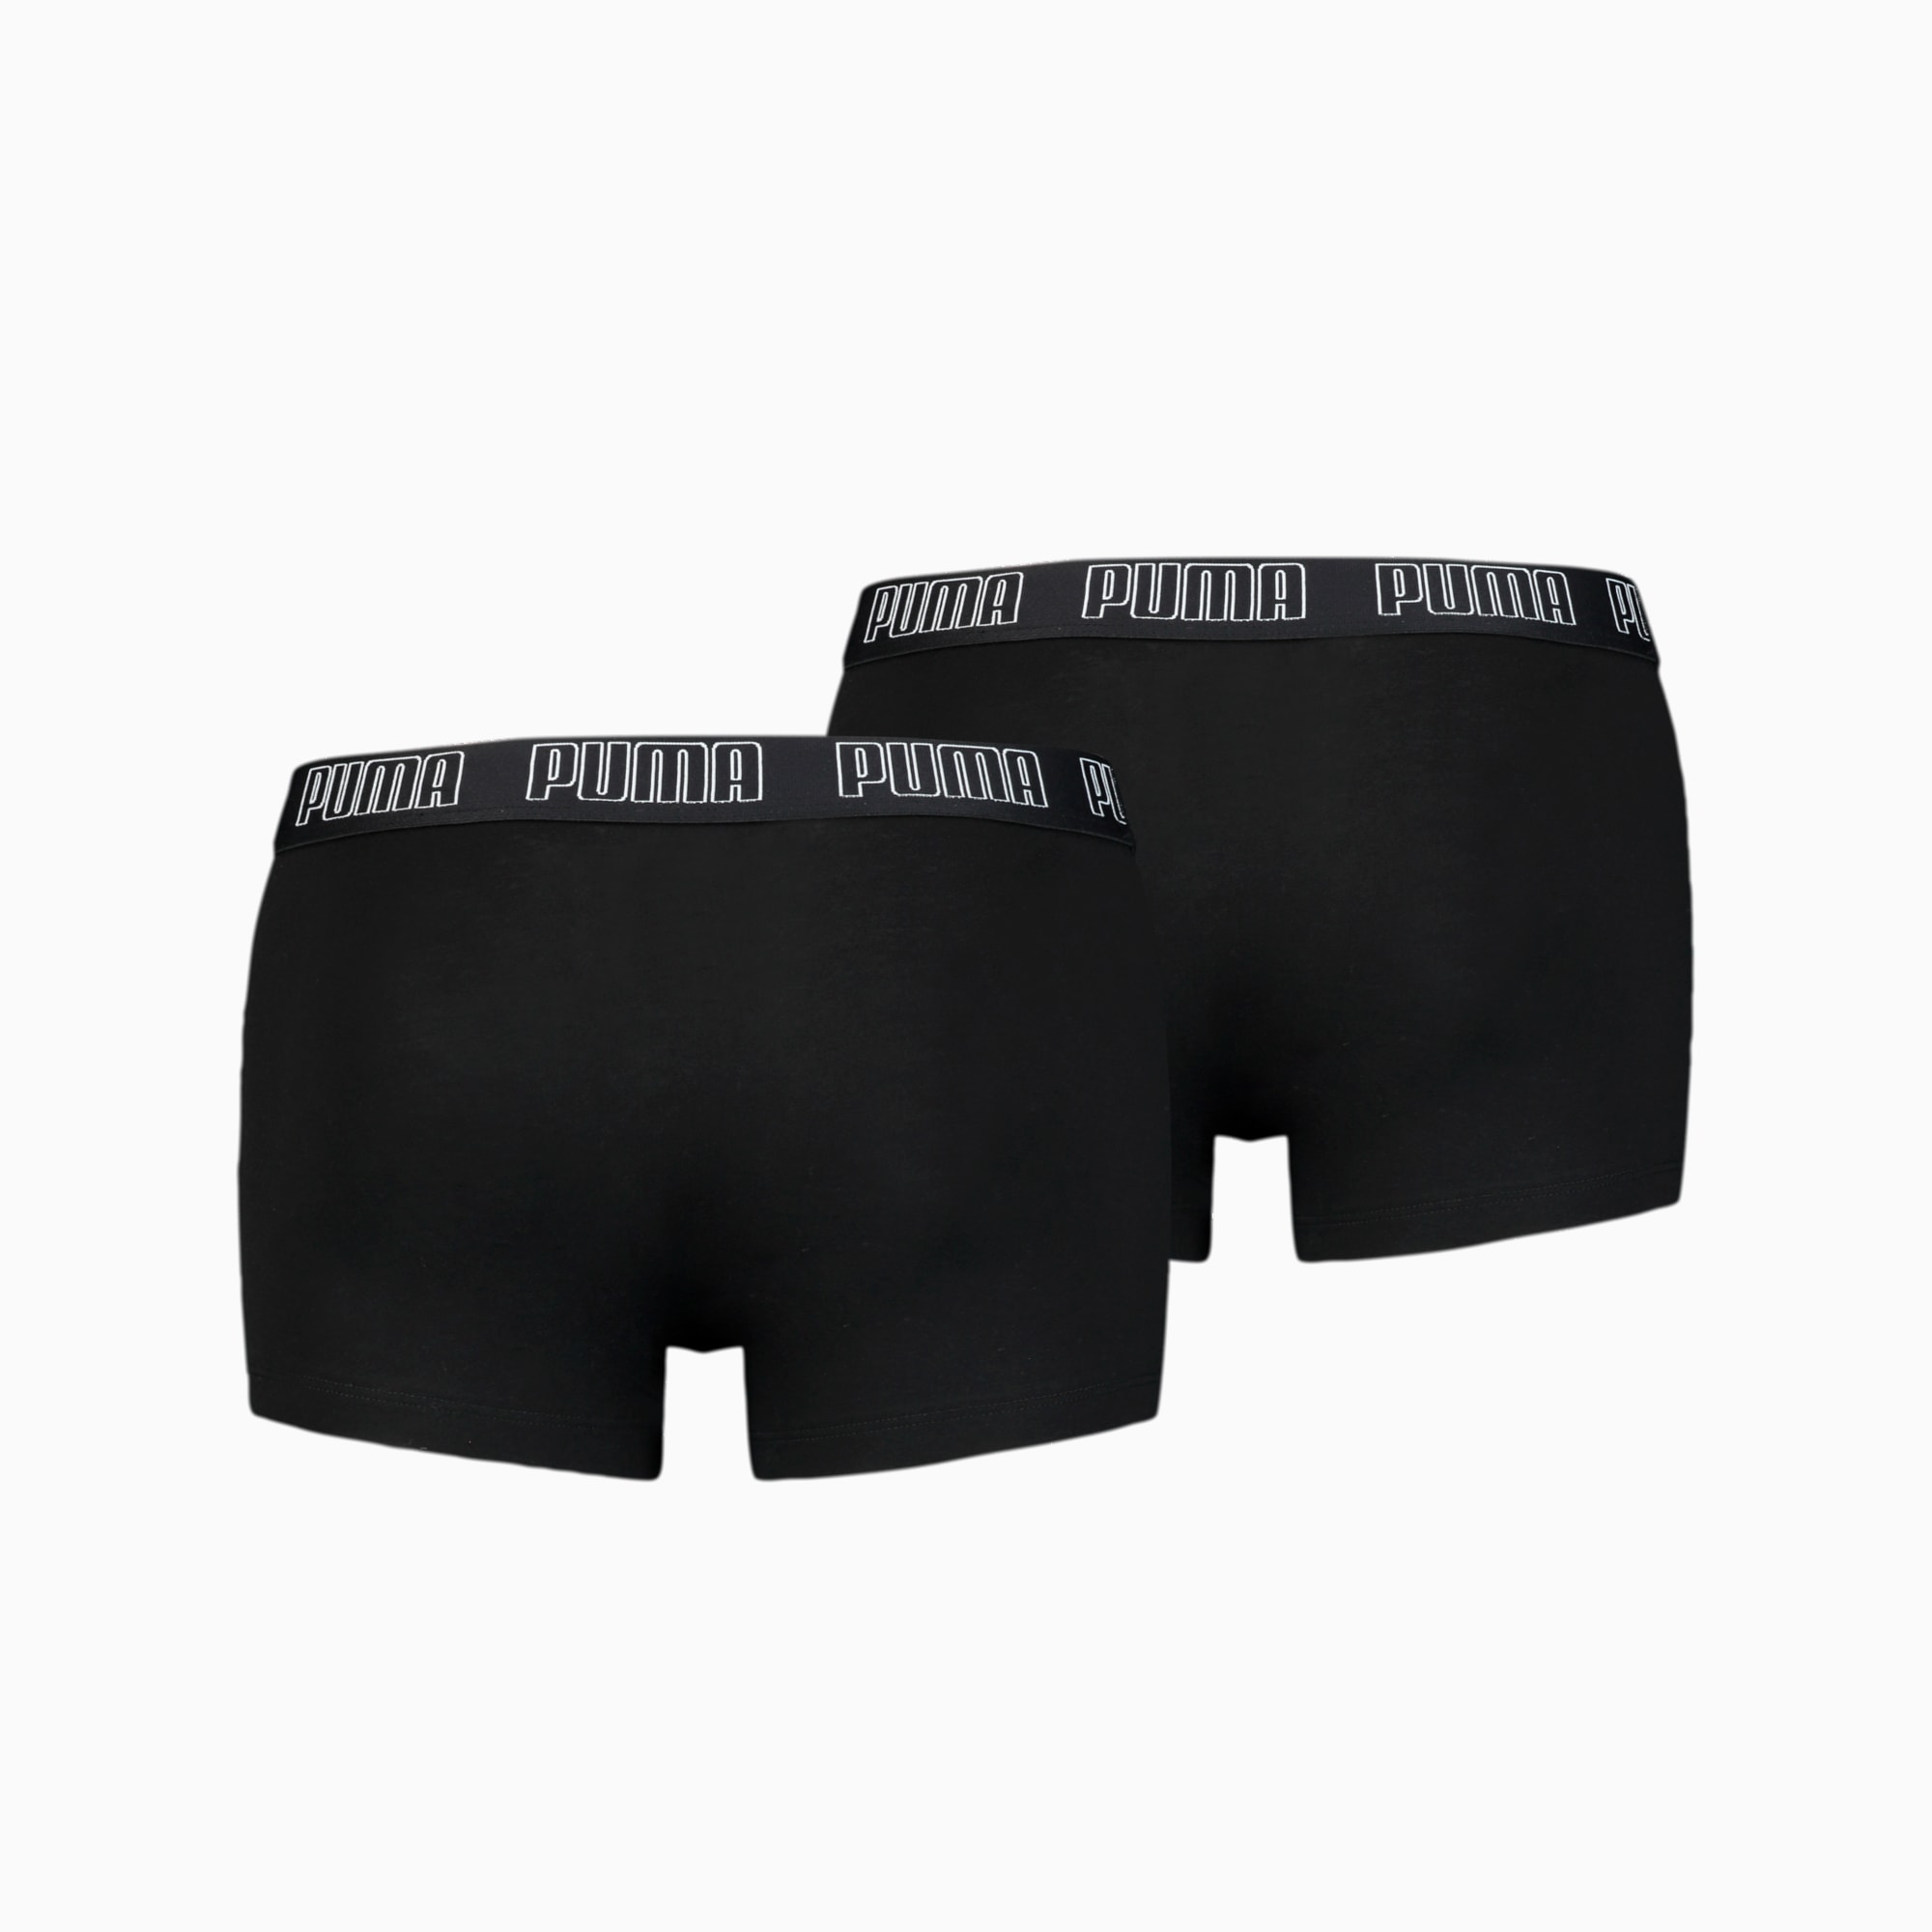 PUMA Basic Men's Trunks 2 Pack, Black, Size L, Clothing